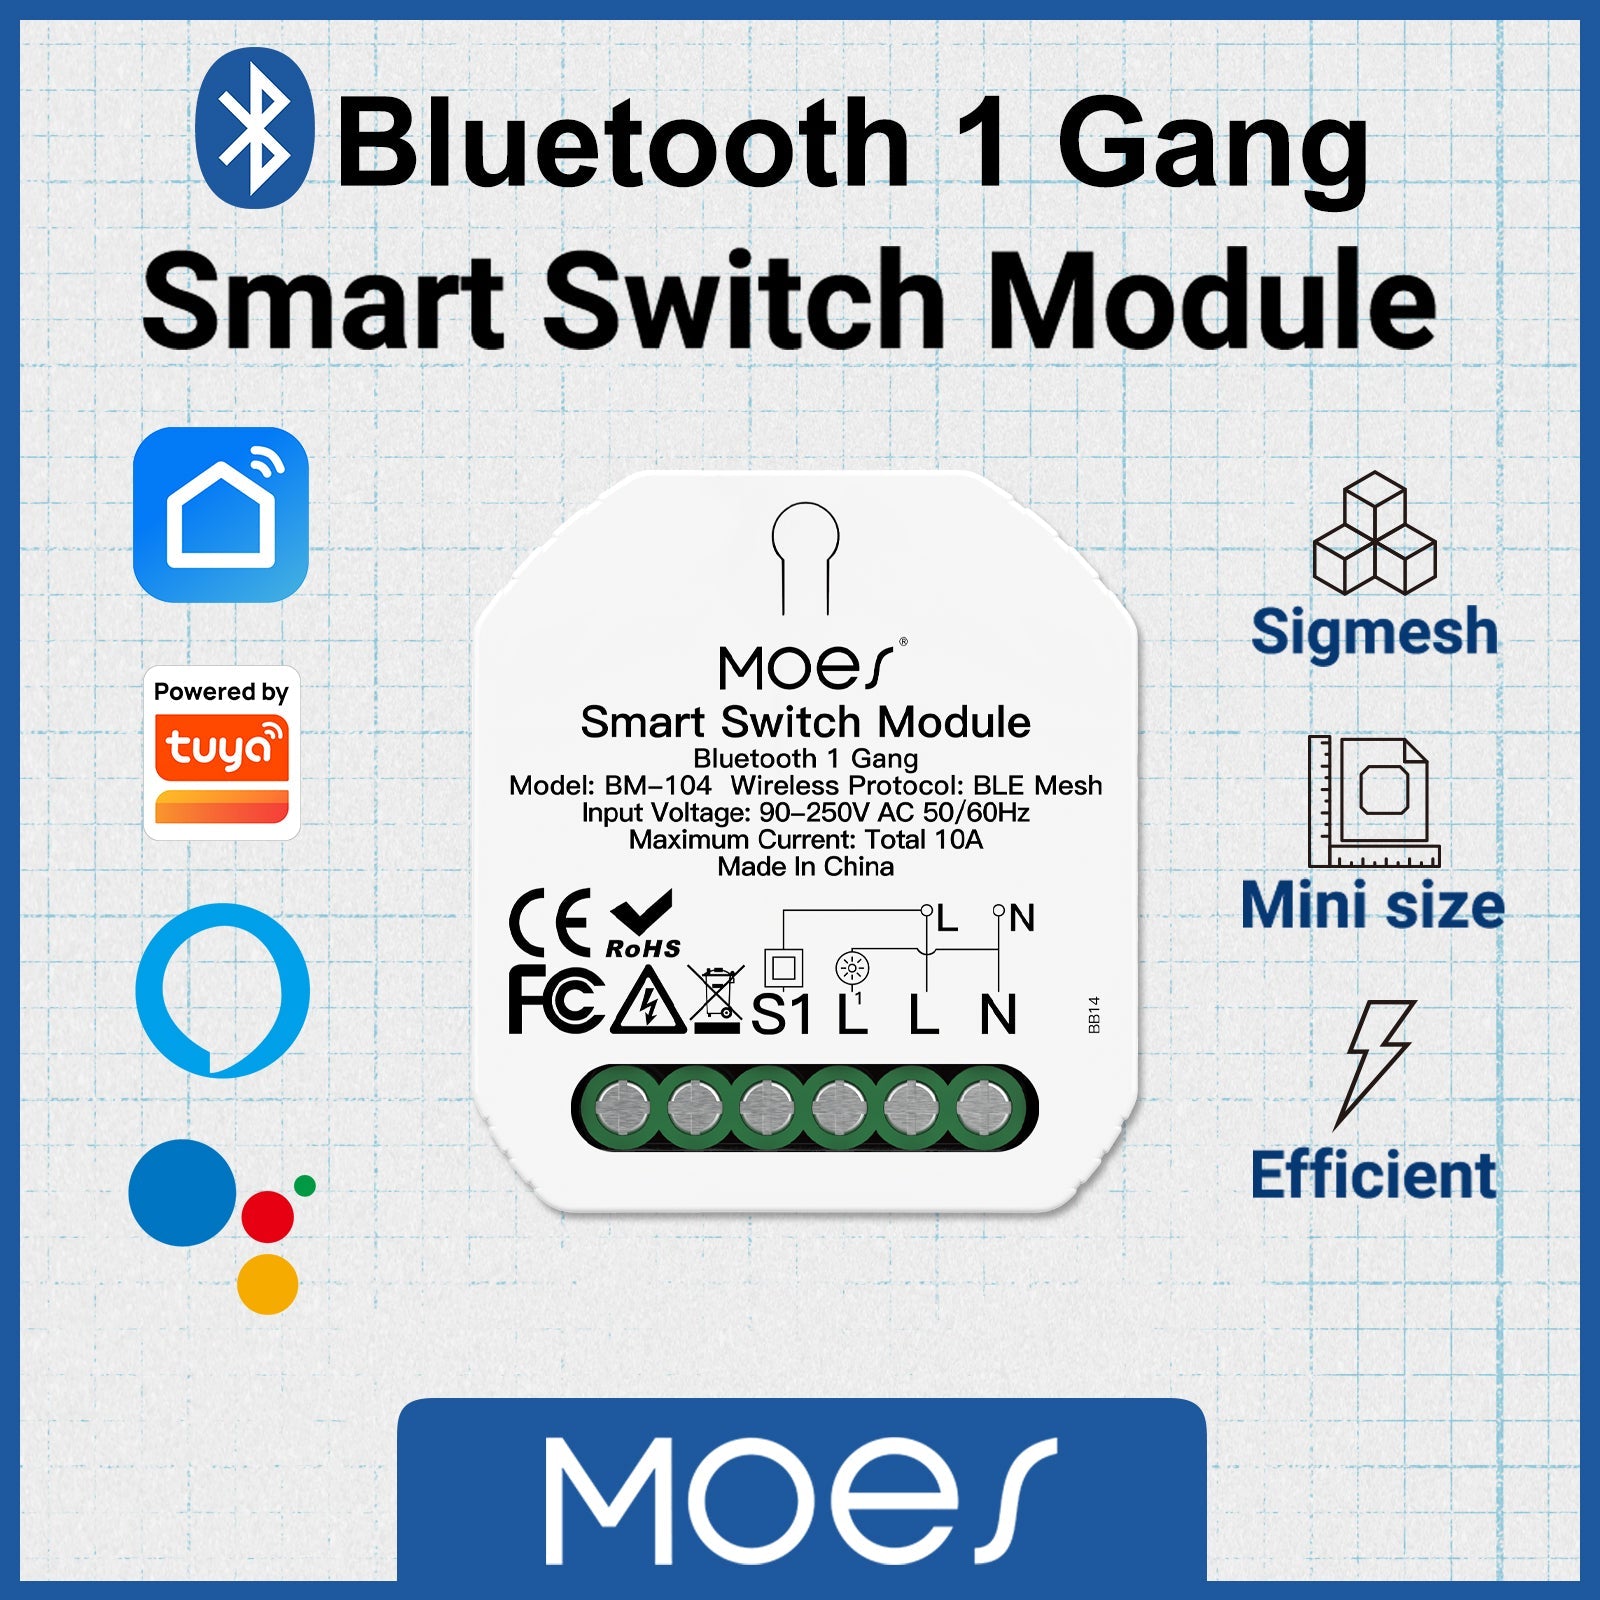 bluetooth 1 gang smart switch module - MOES